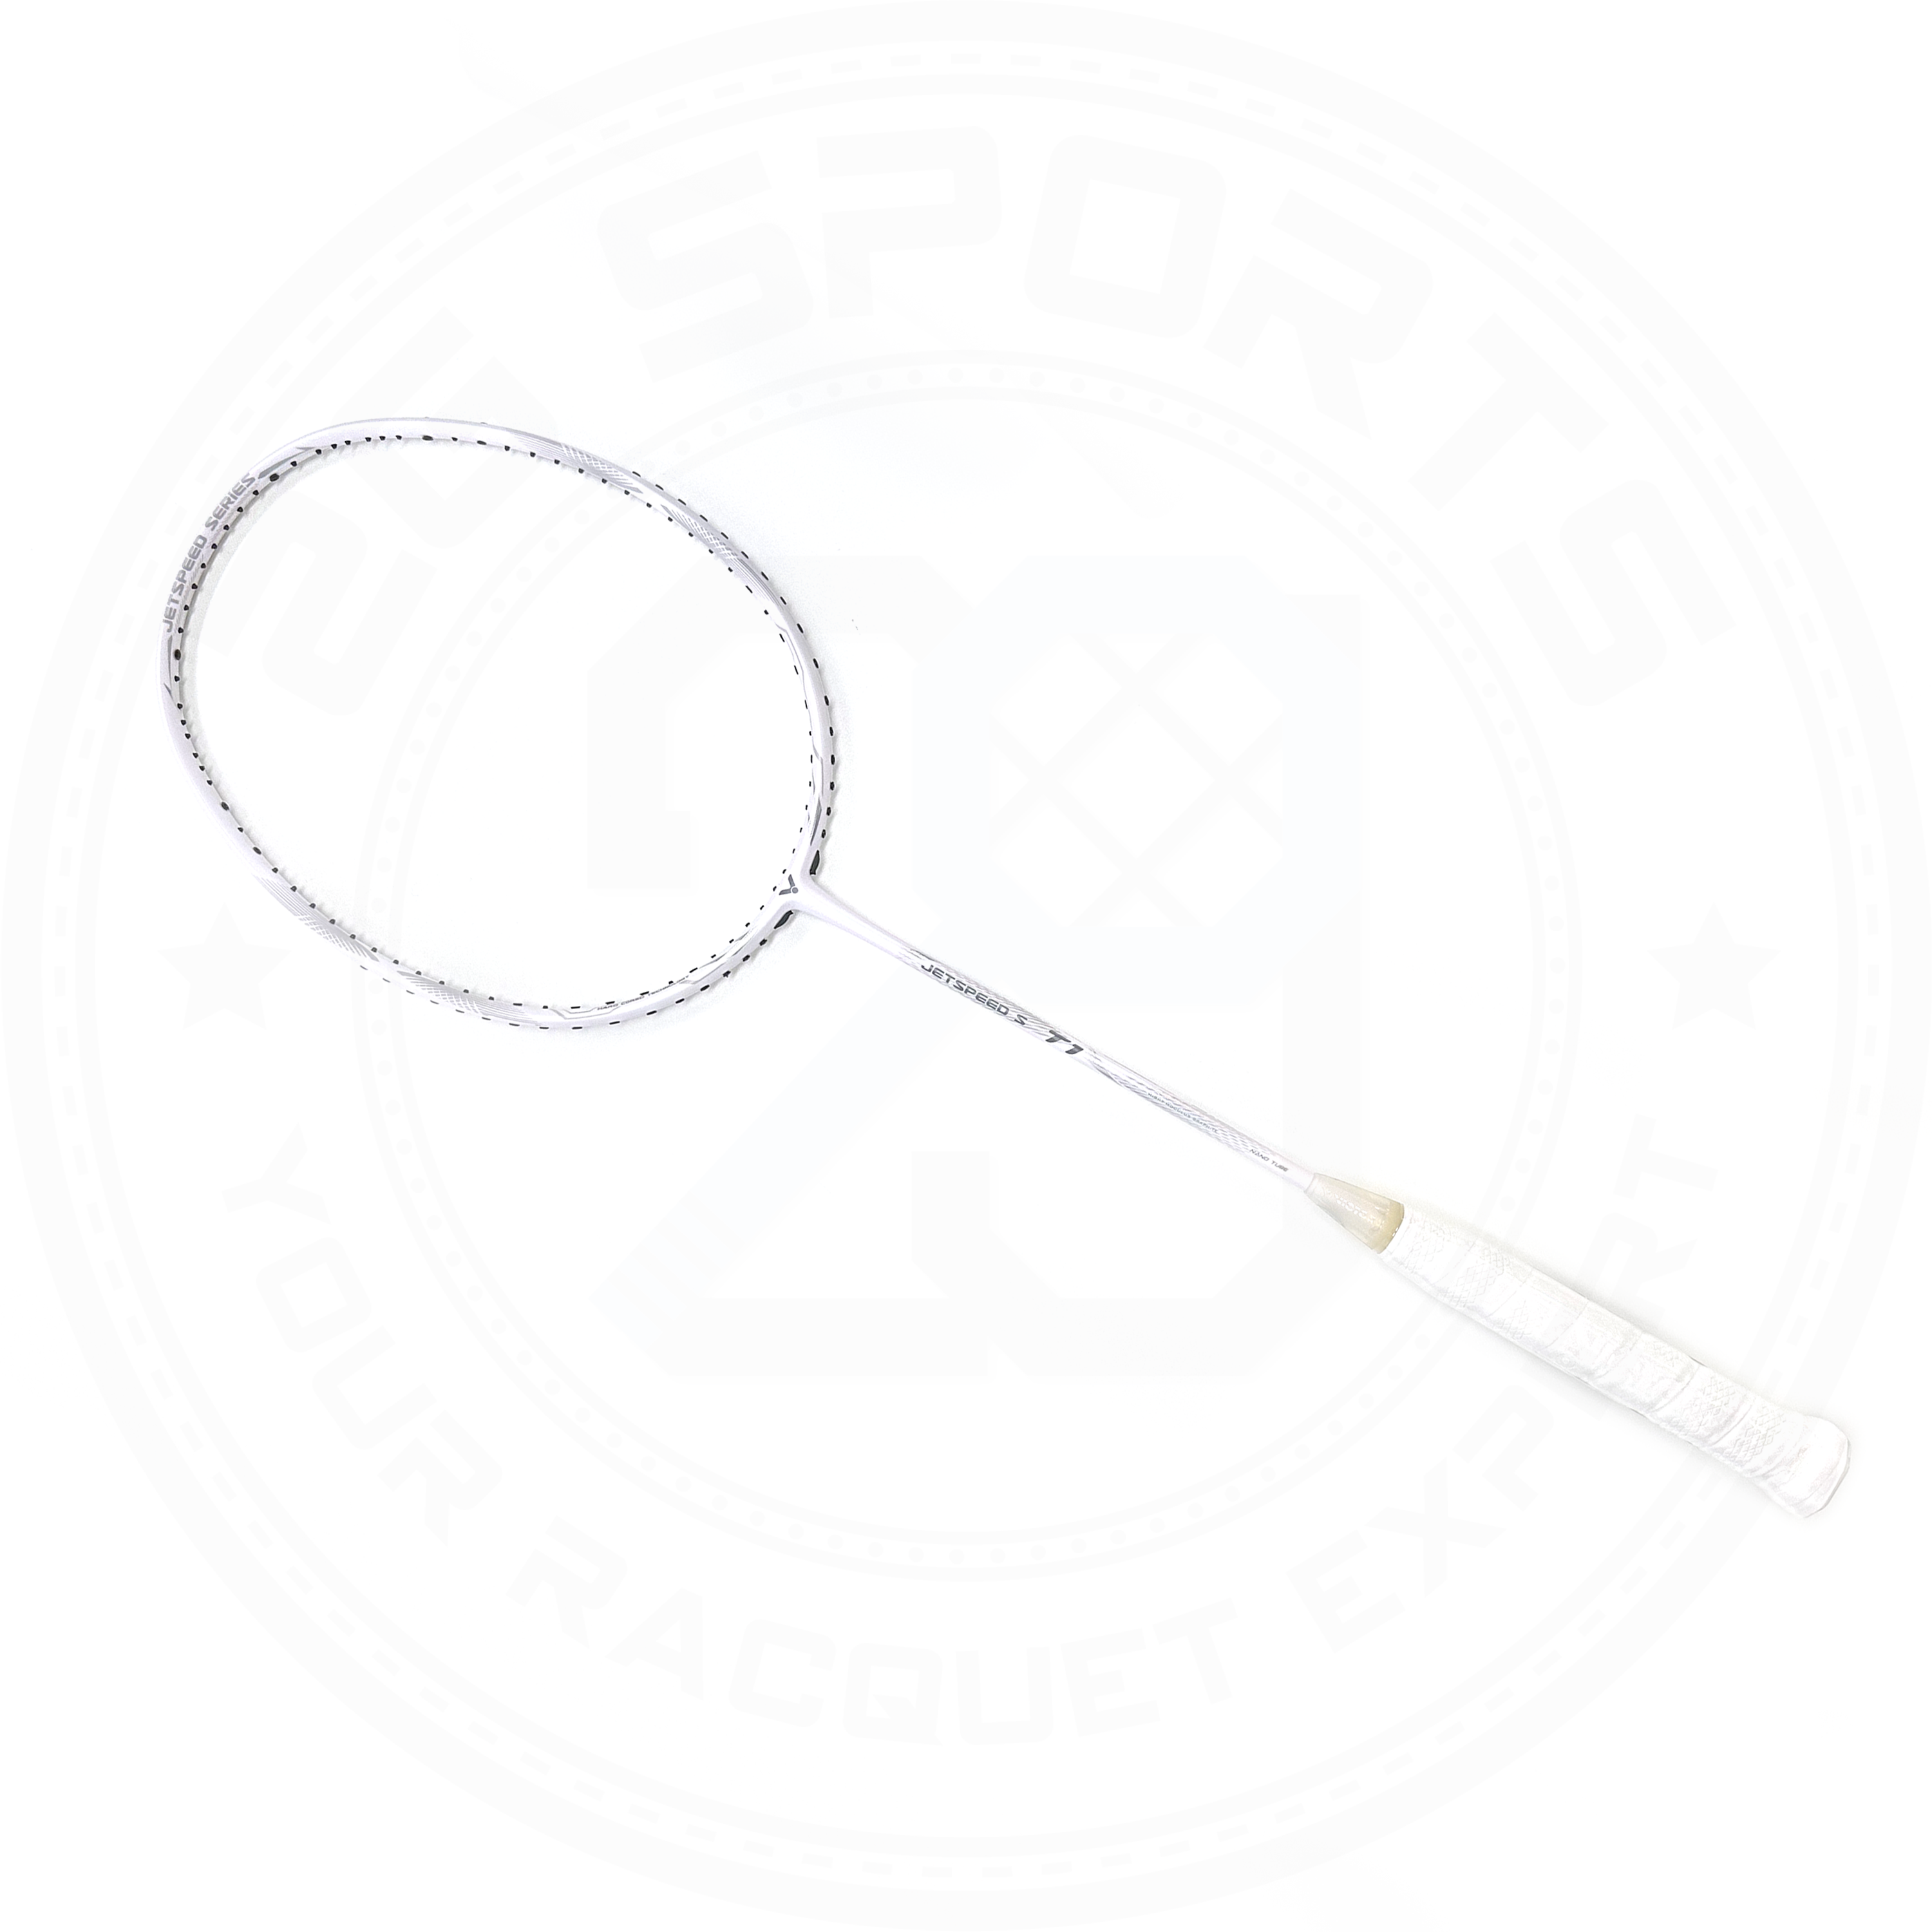 Victor Jetspeed S T1 Badminton Racquet 4U(83g)G5